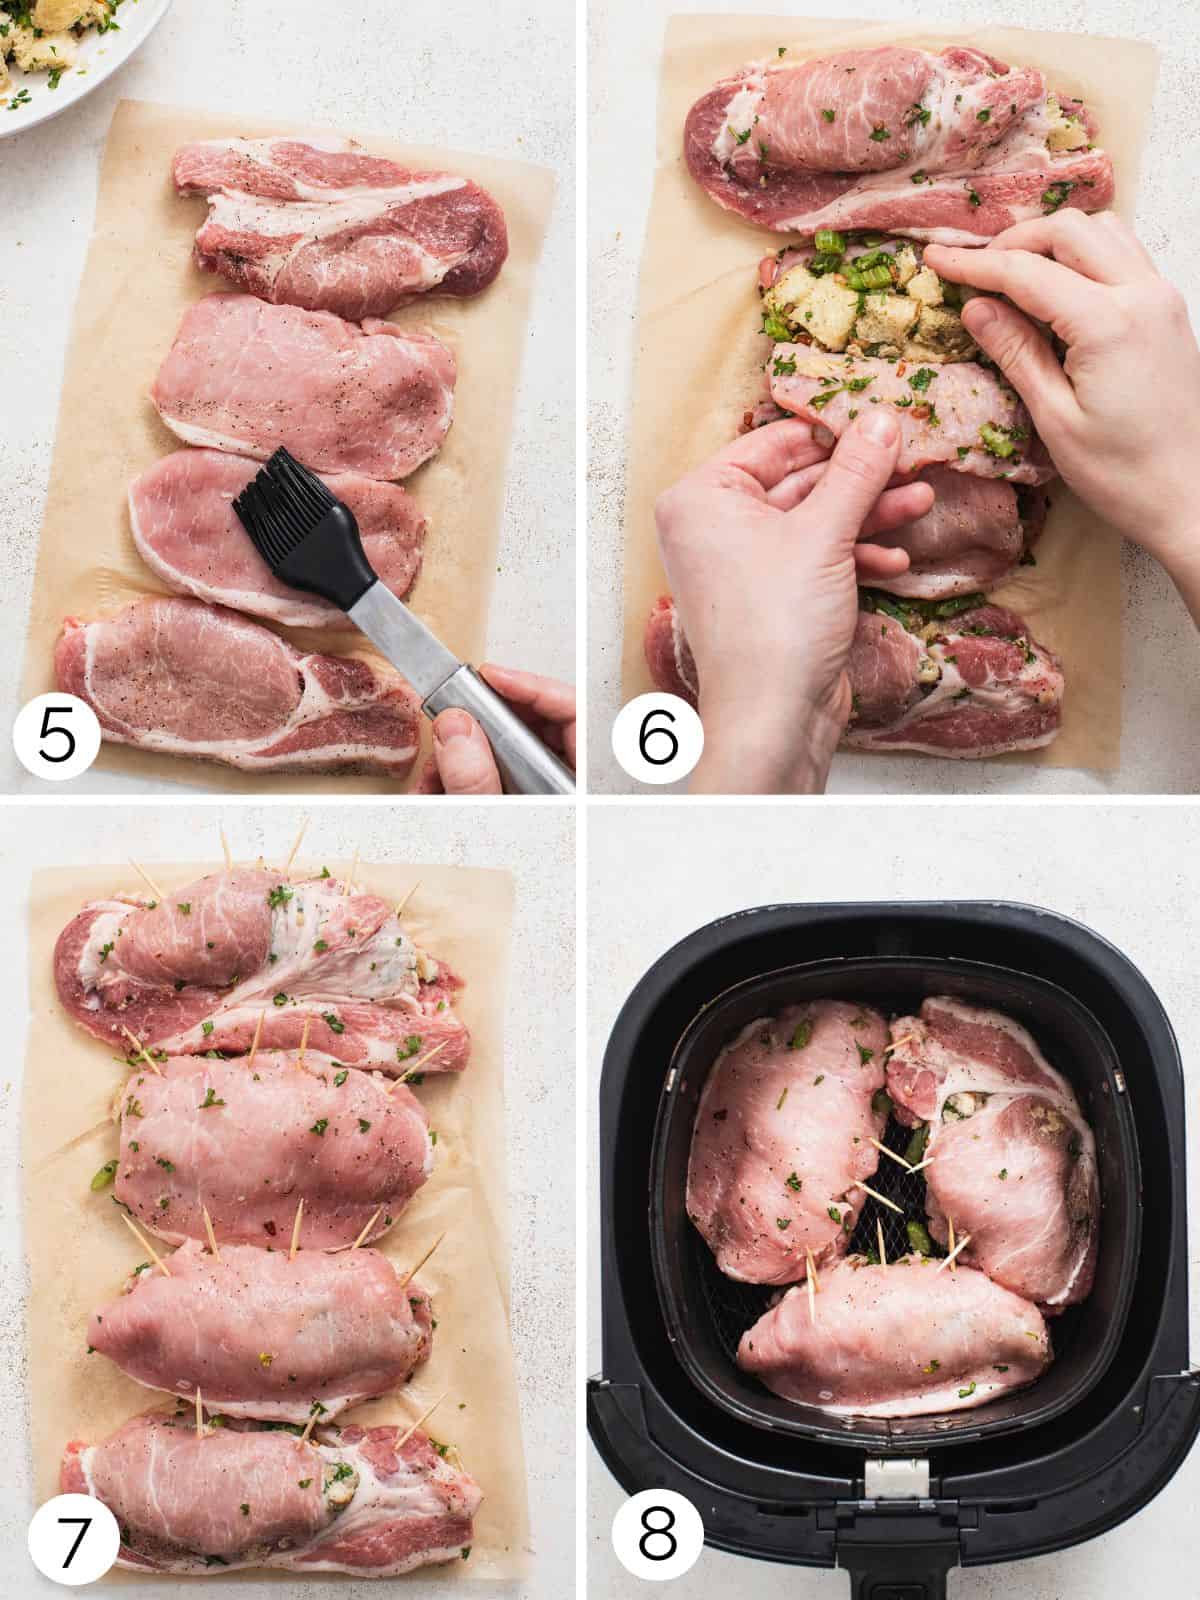 Process photos showing how to stuff boneless pork chops.